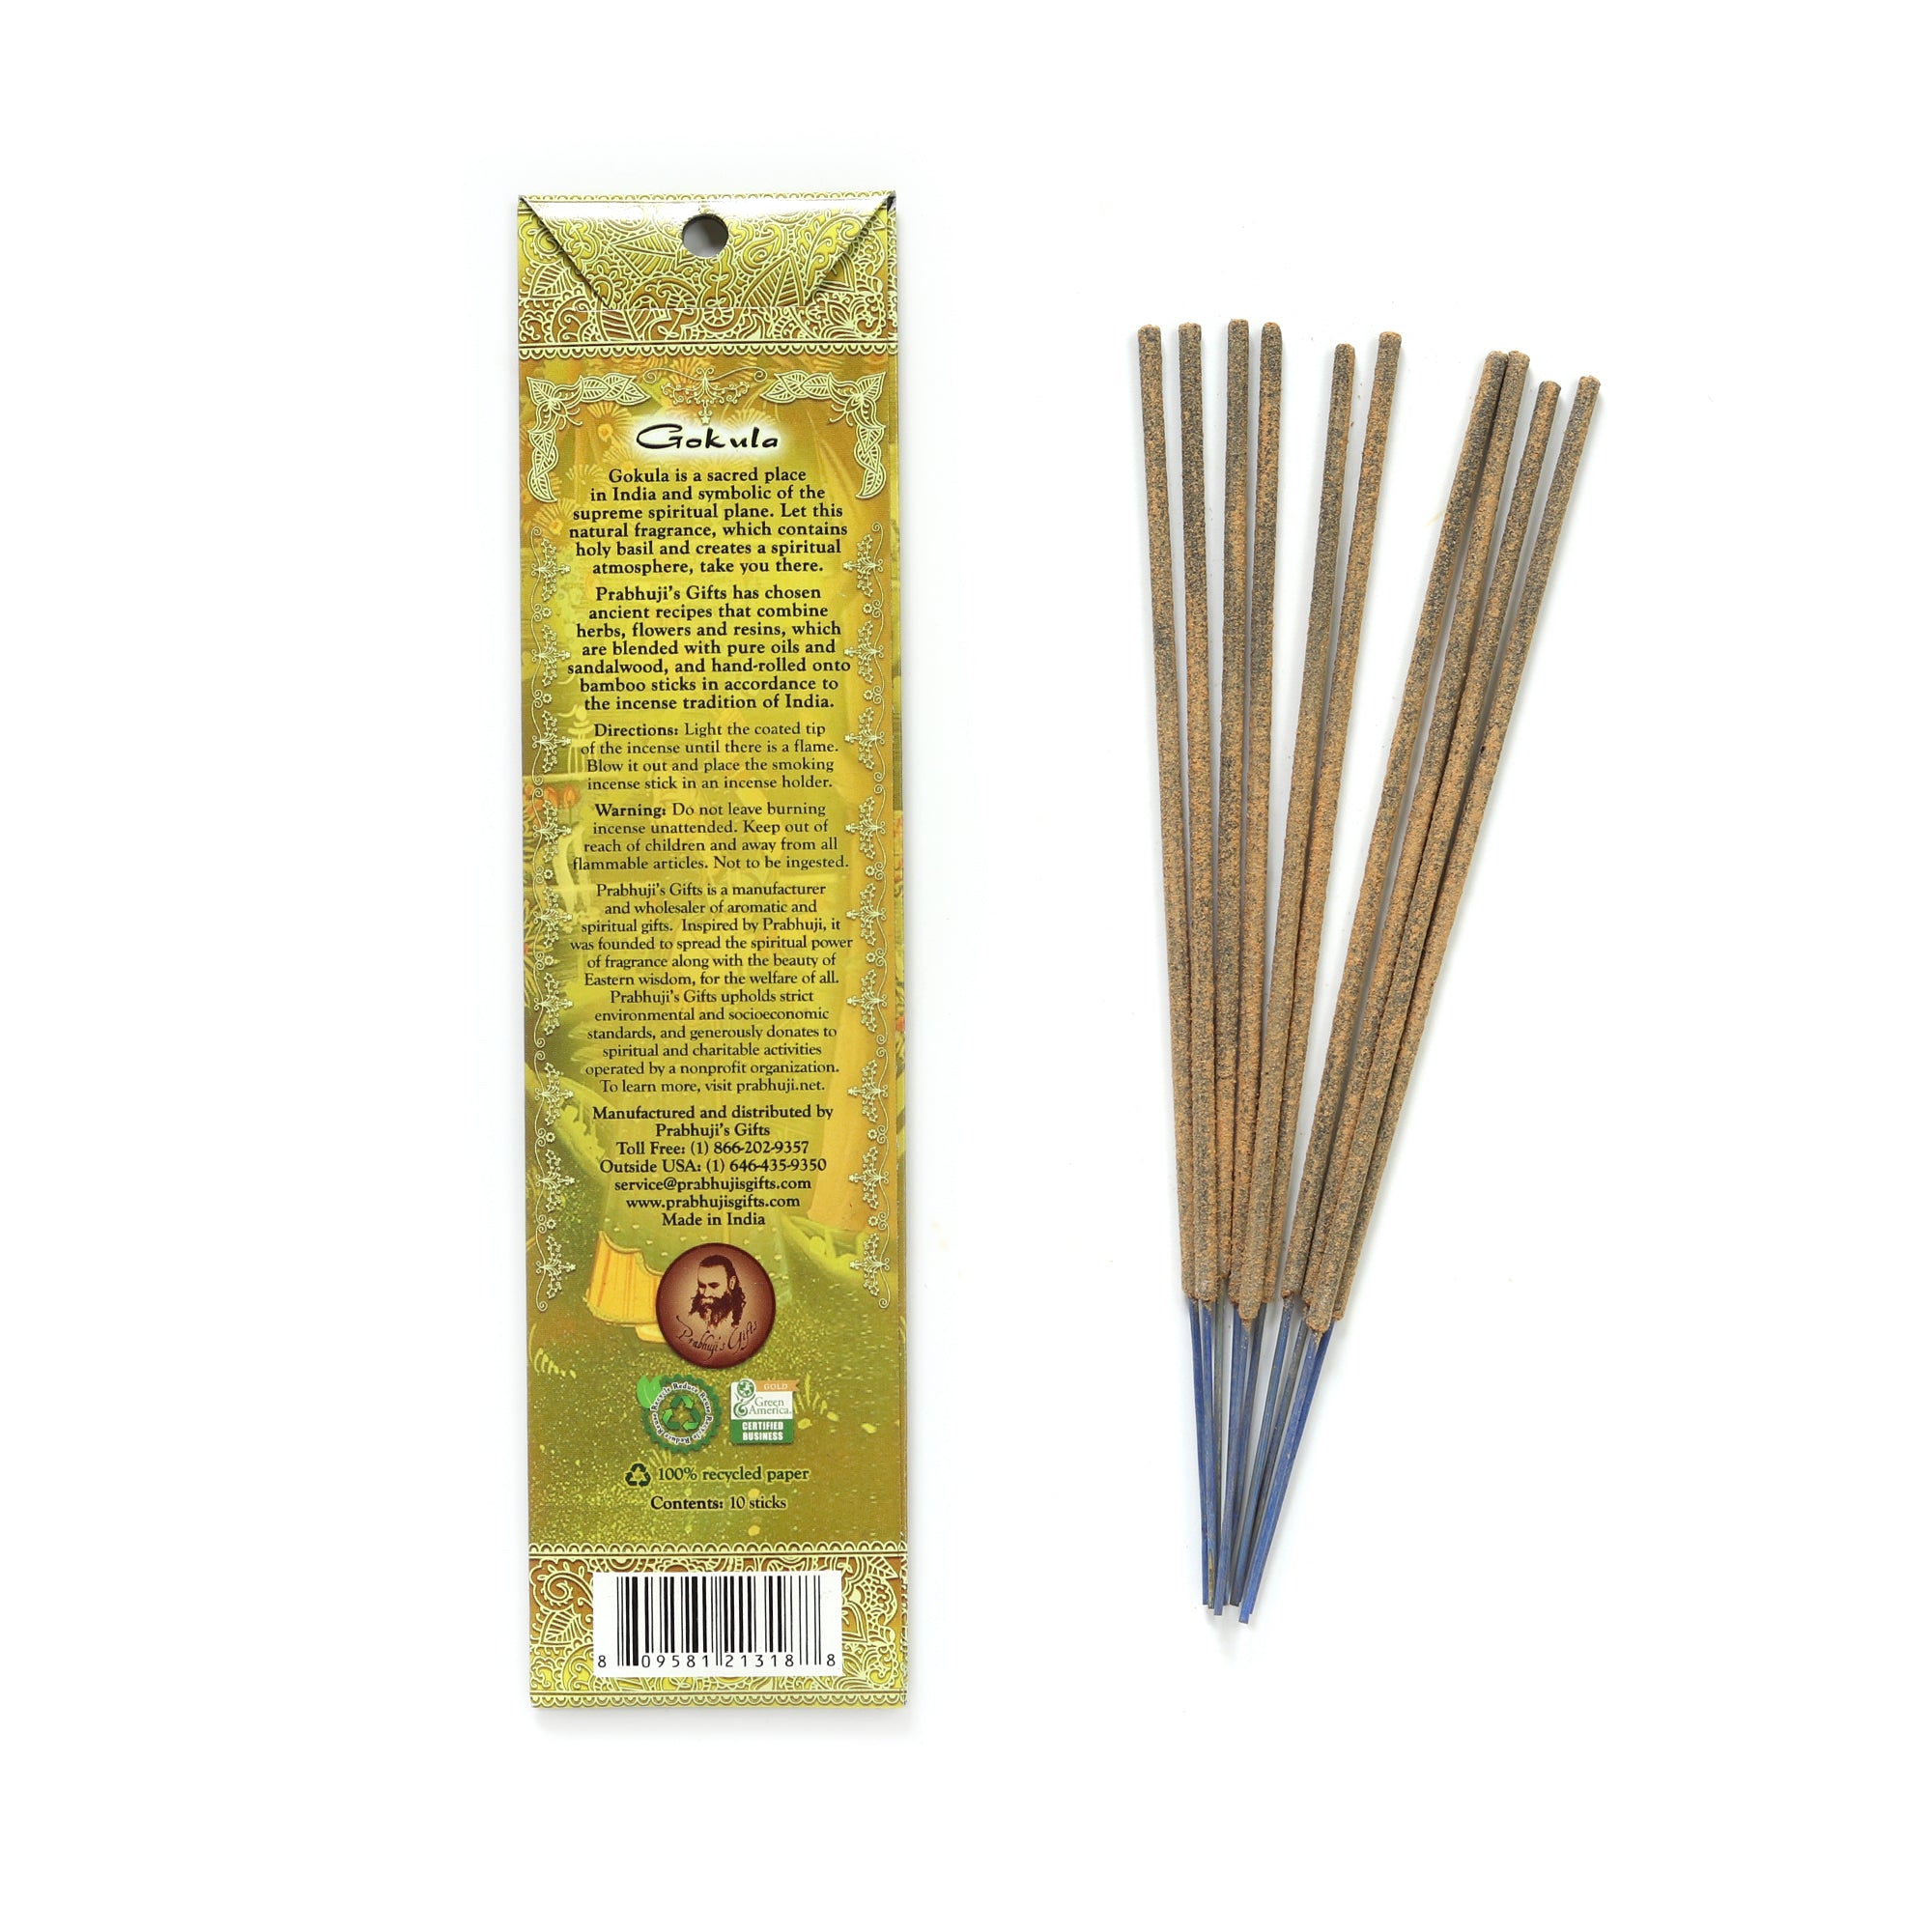 Gokula Incense Sticks - Myrrh, Vanilla, and Tulsi - Wholesale and ...